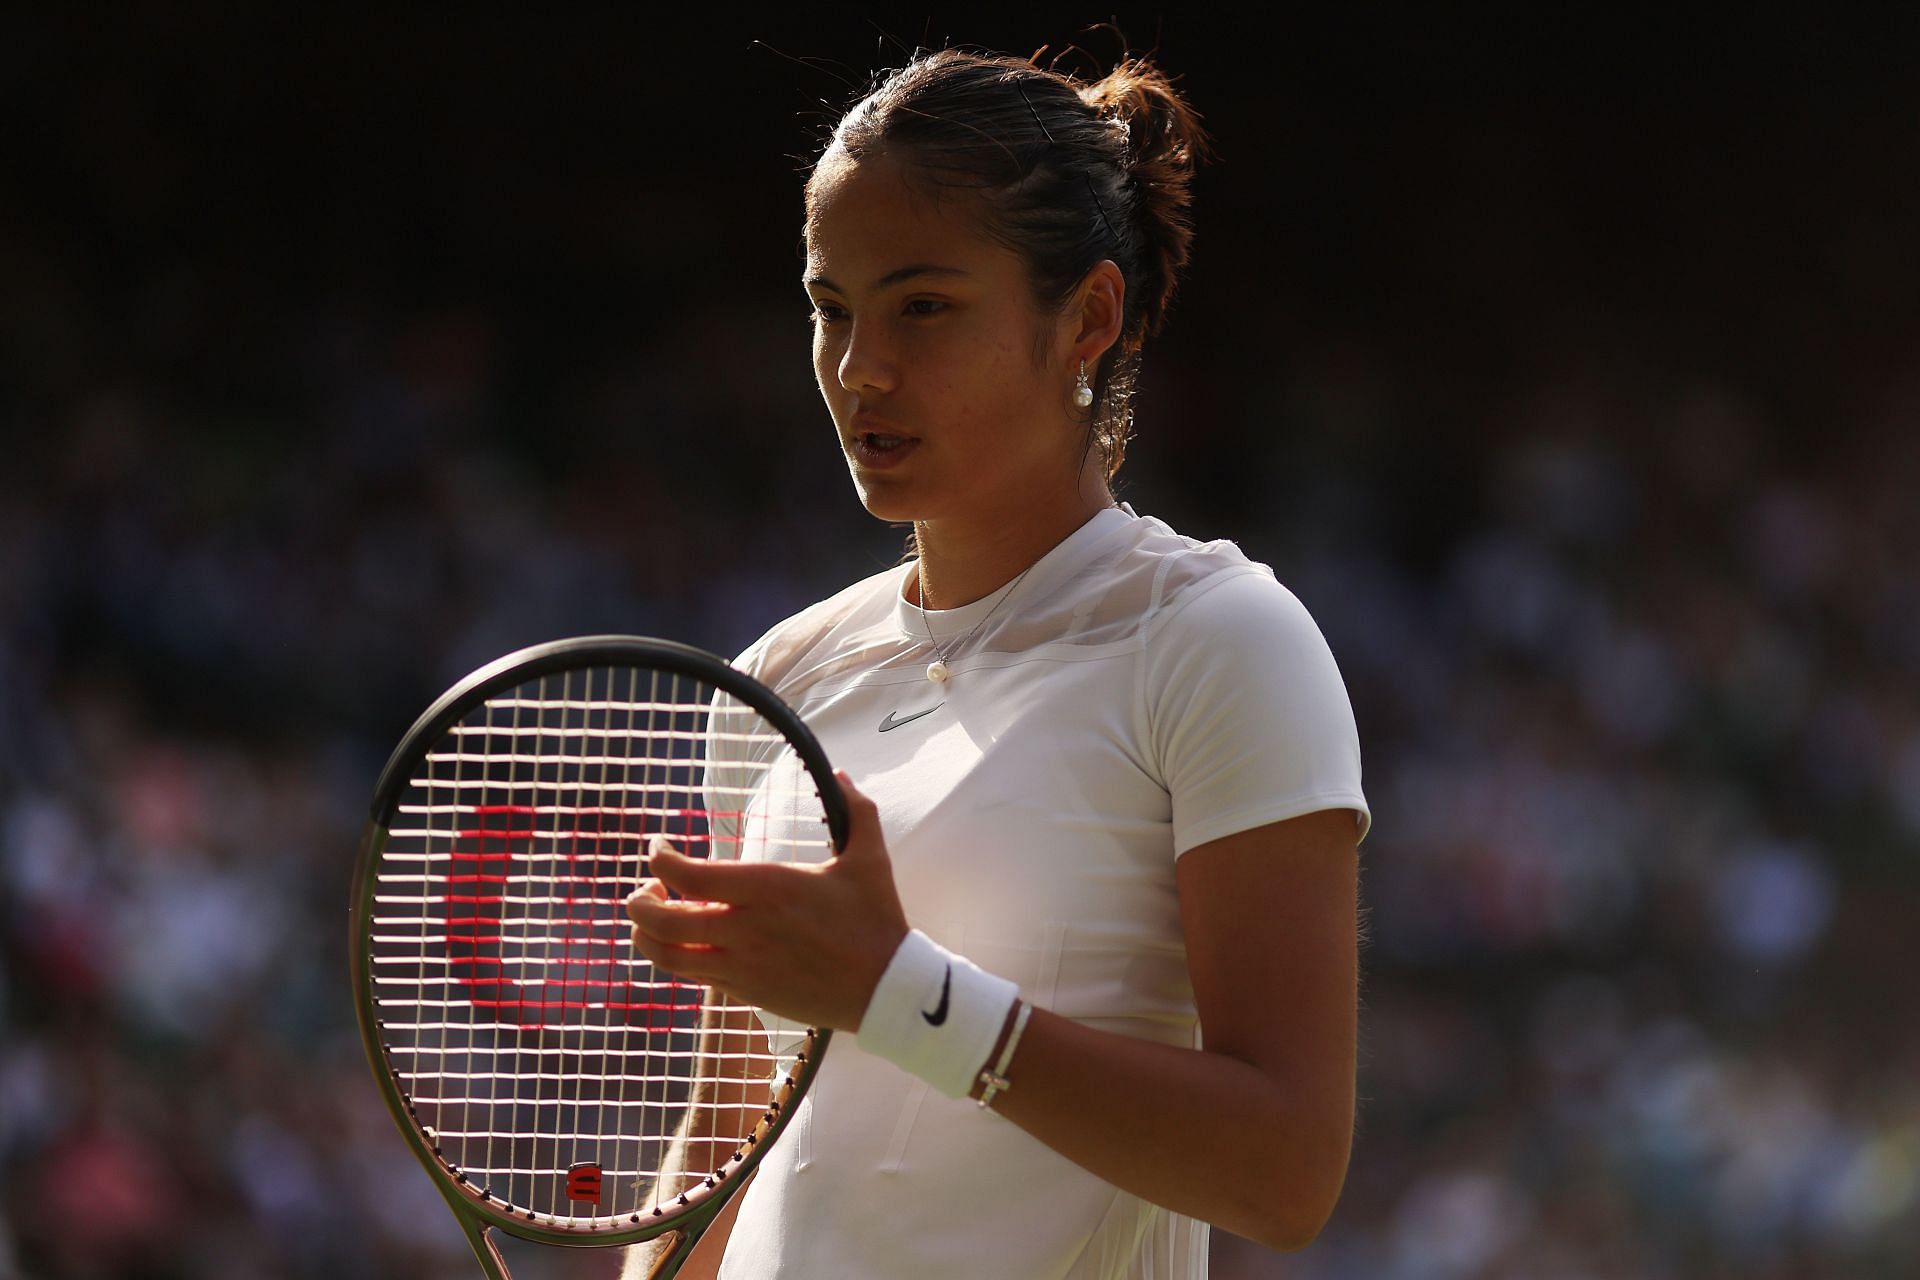 Emma Raducanu takes on Caroline Garica in the second round of the 2022 Wimbledon